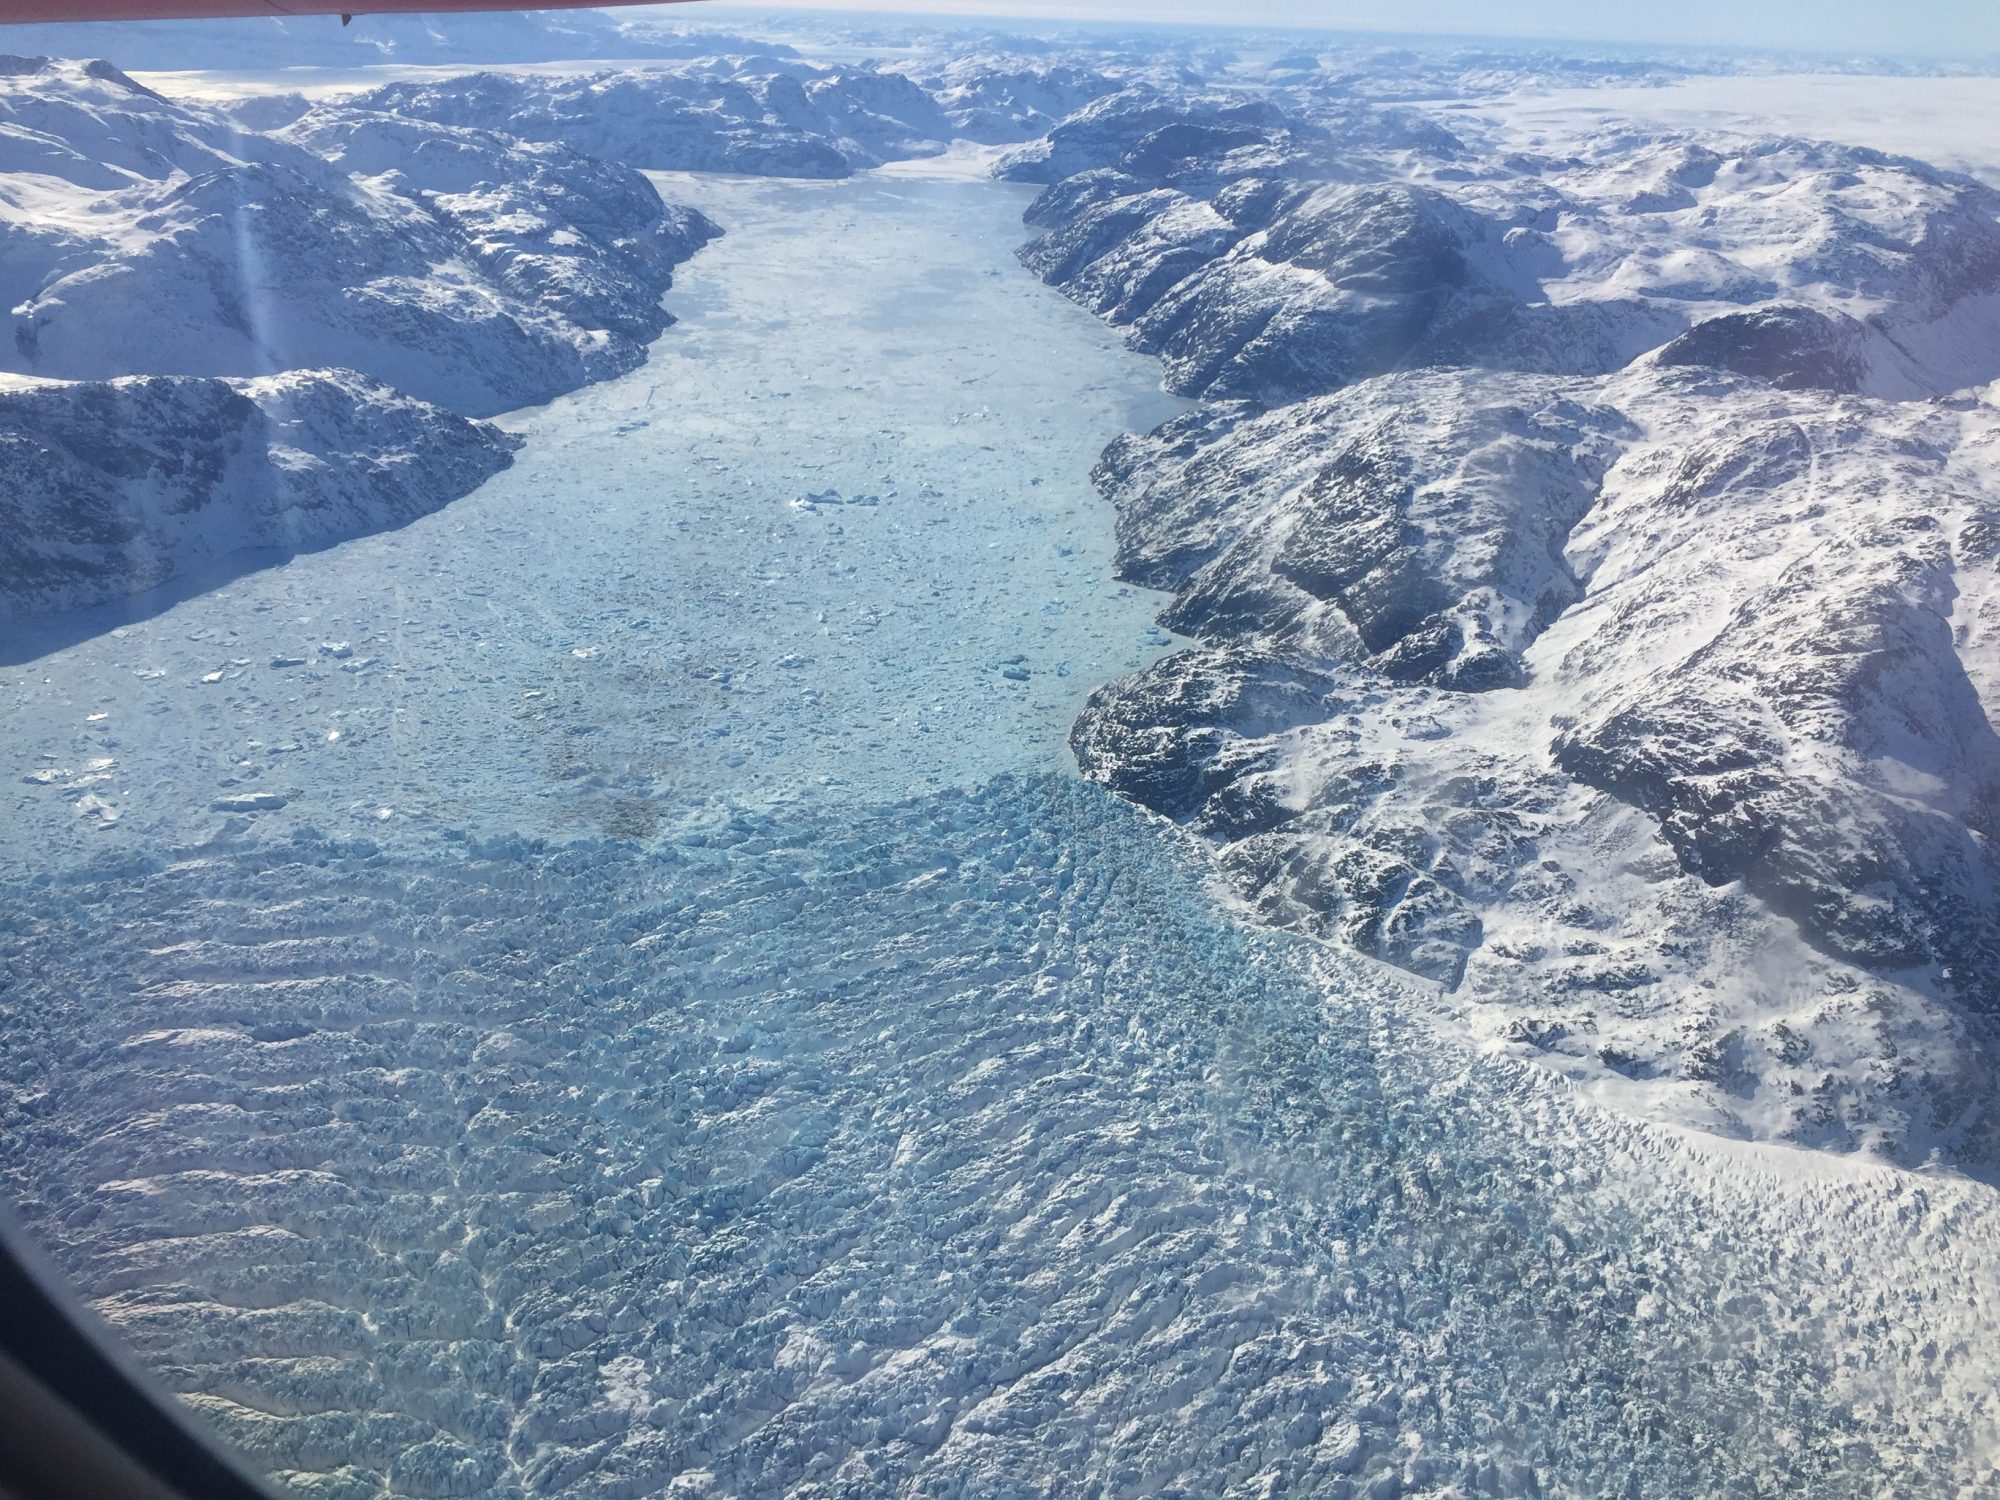 Glacier Calving into a lake/reservoir, credit: Claus Andersen-Aagaard.